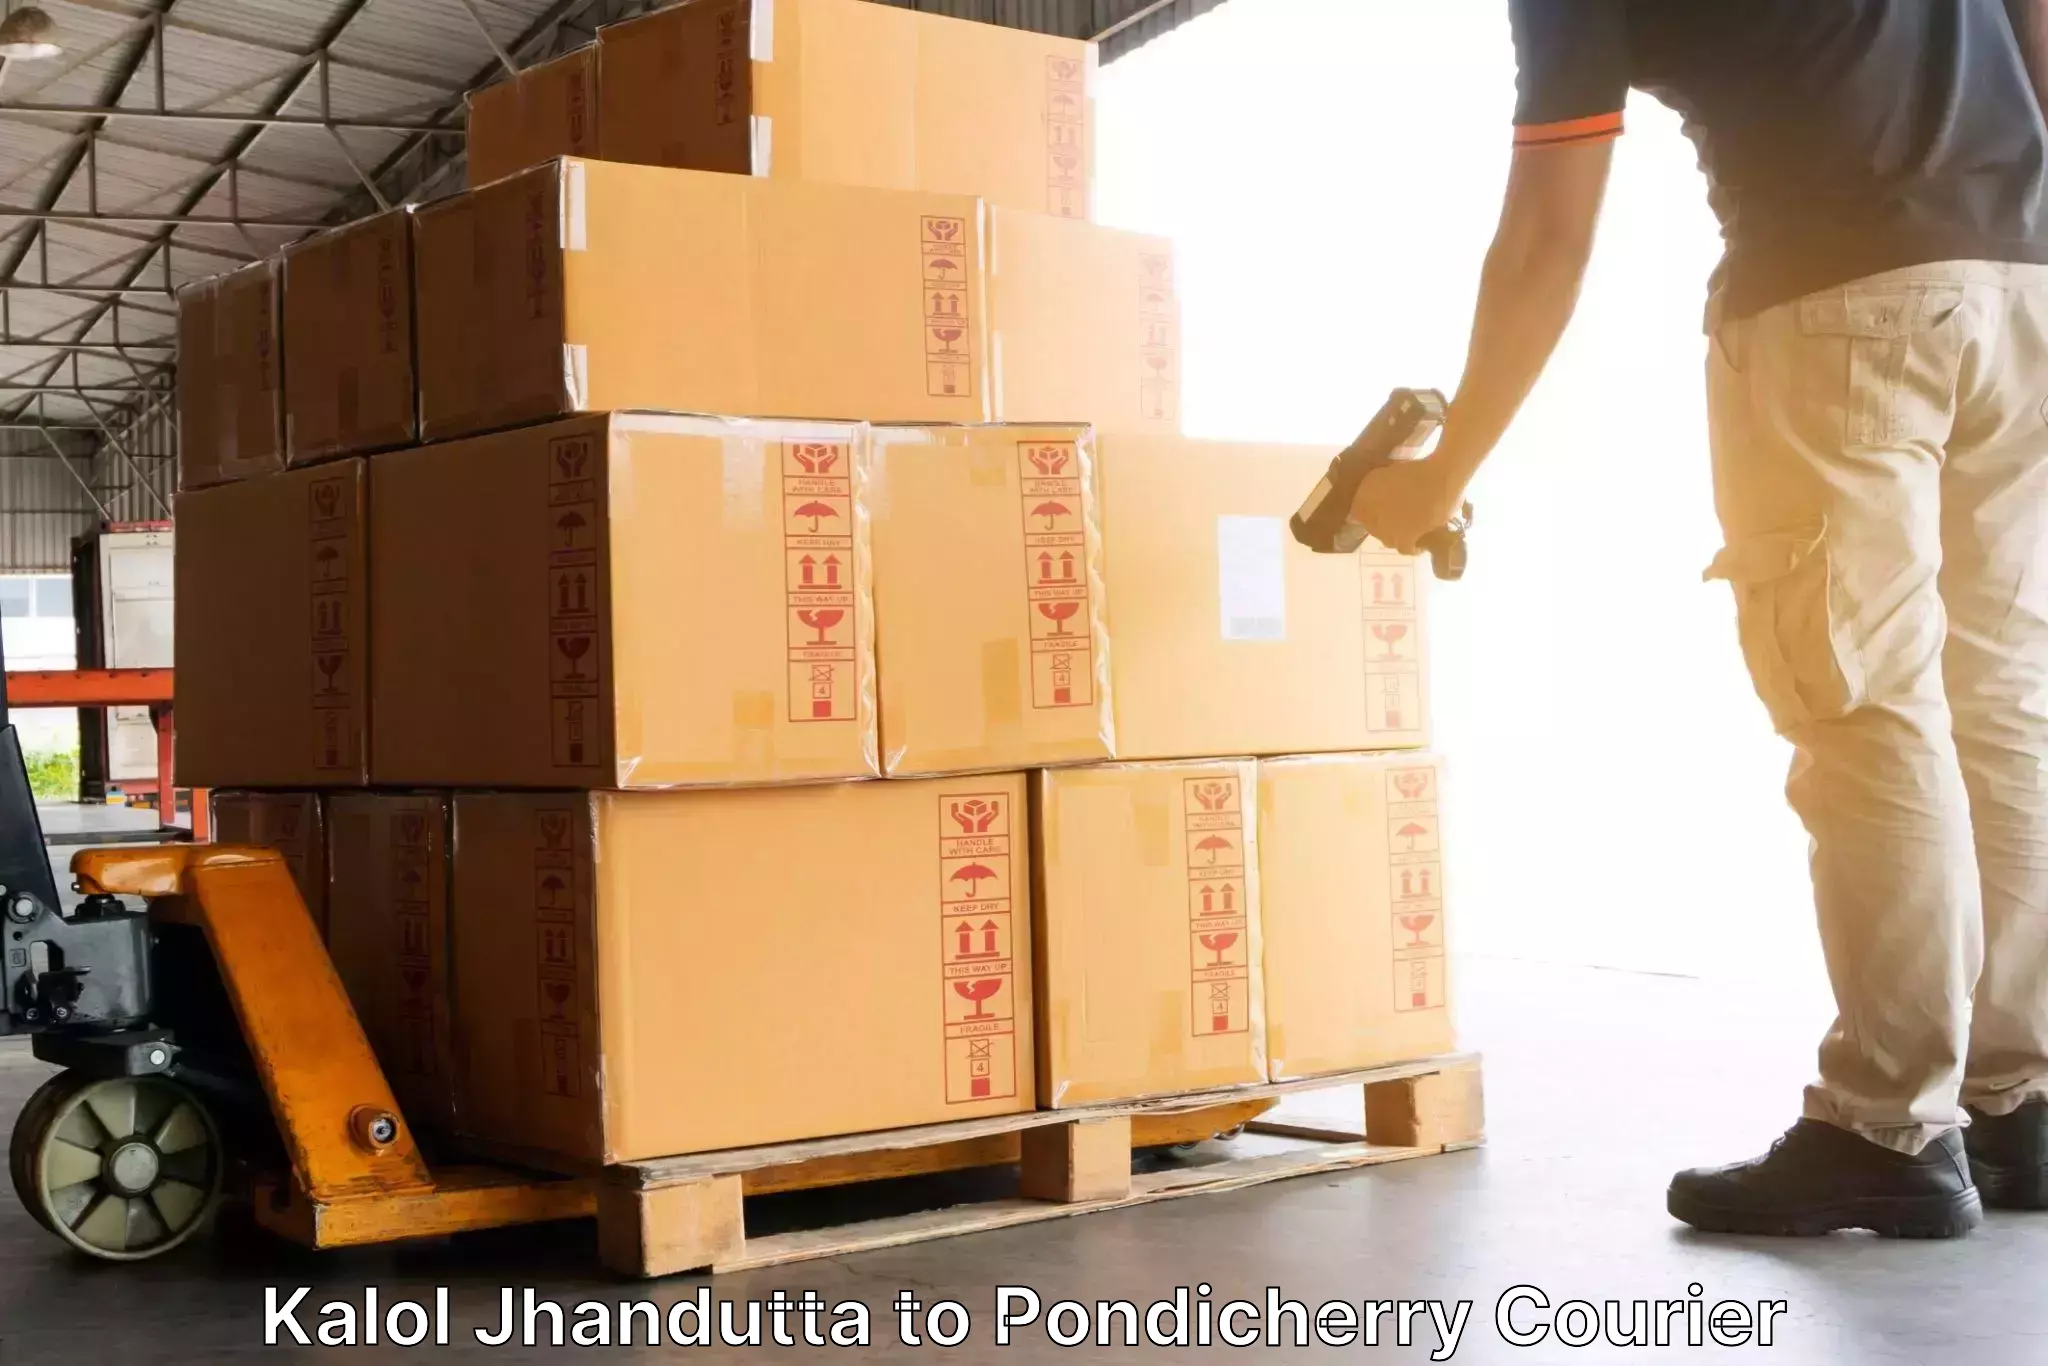 Nationwide shipping coverage Kalol Jhandutta to Pondicherry University